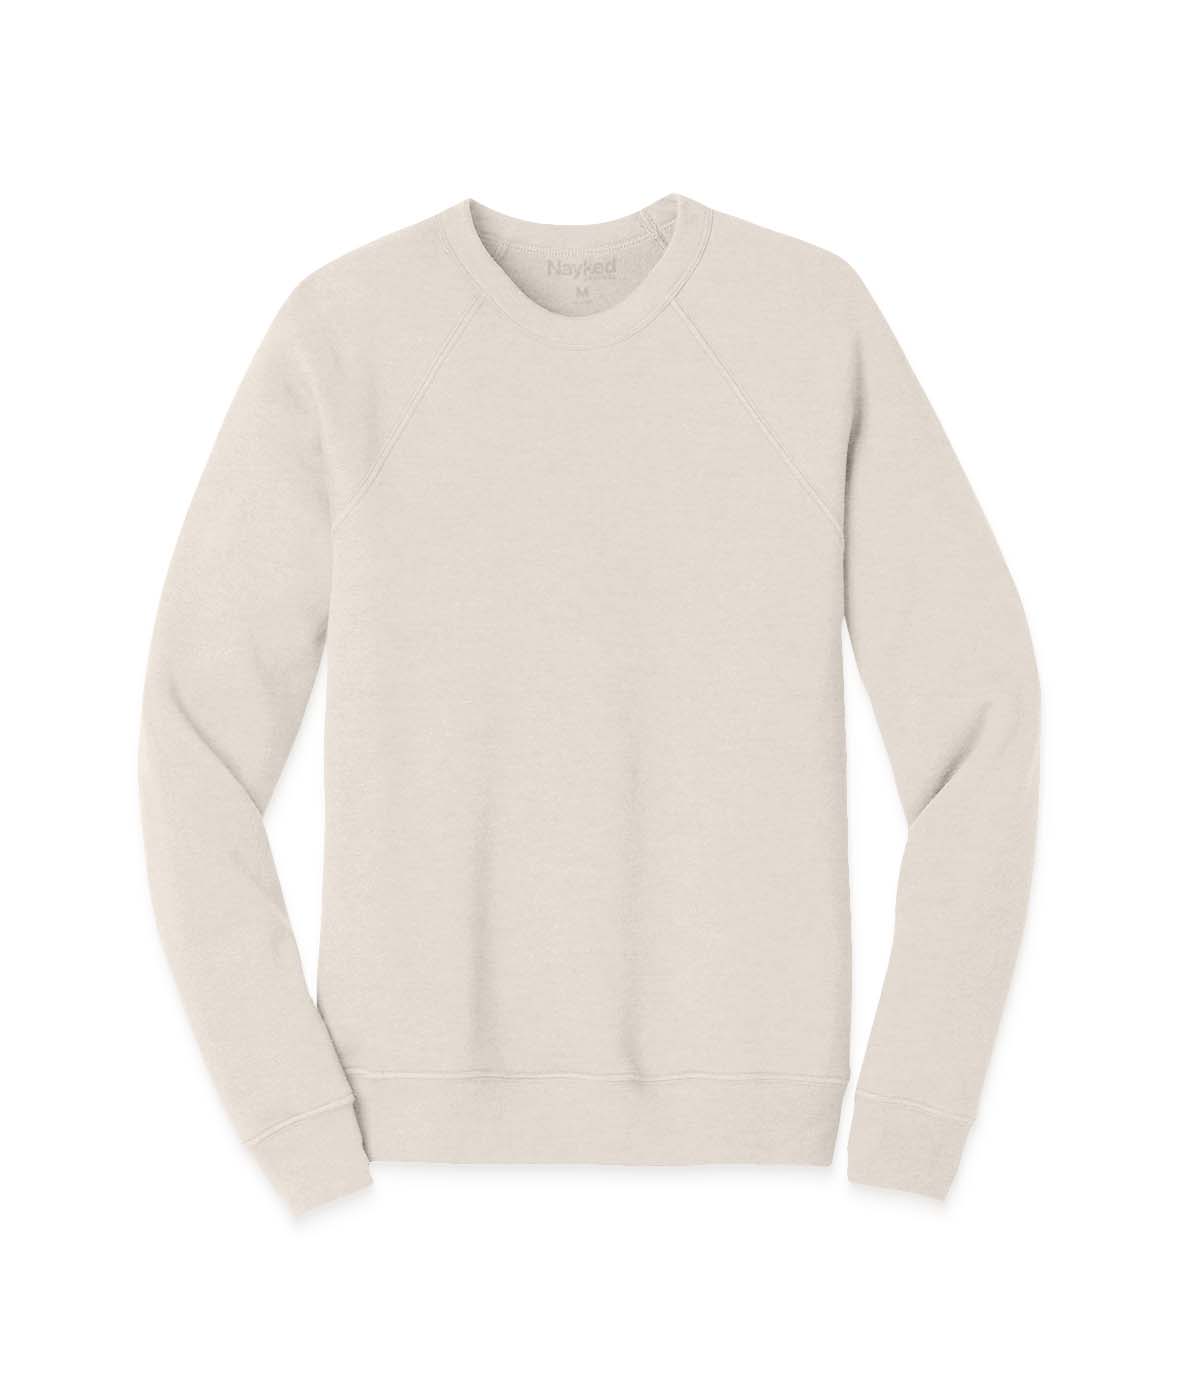 Nayked Apparel Men's Ridiculously Lightweight Heathered Fleece Sweatshirt